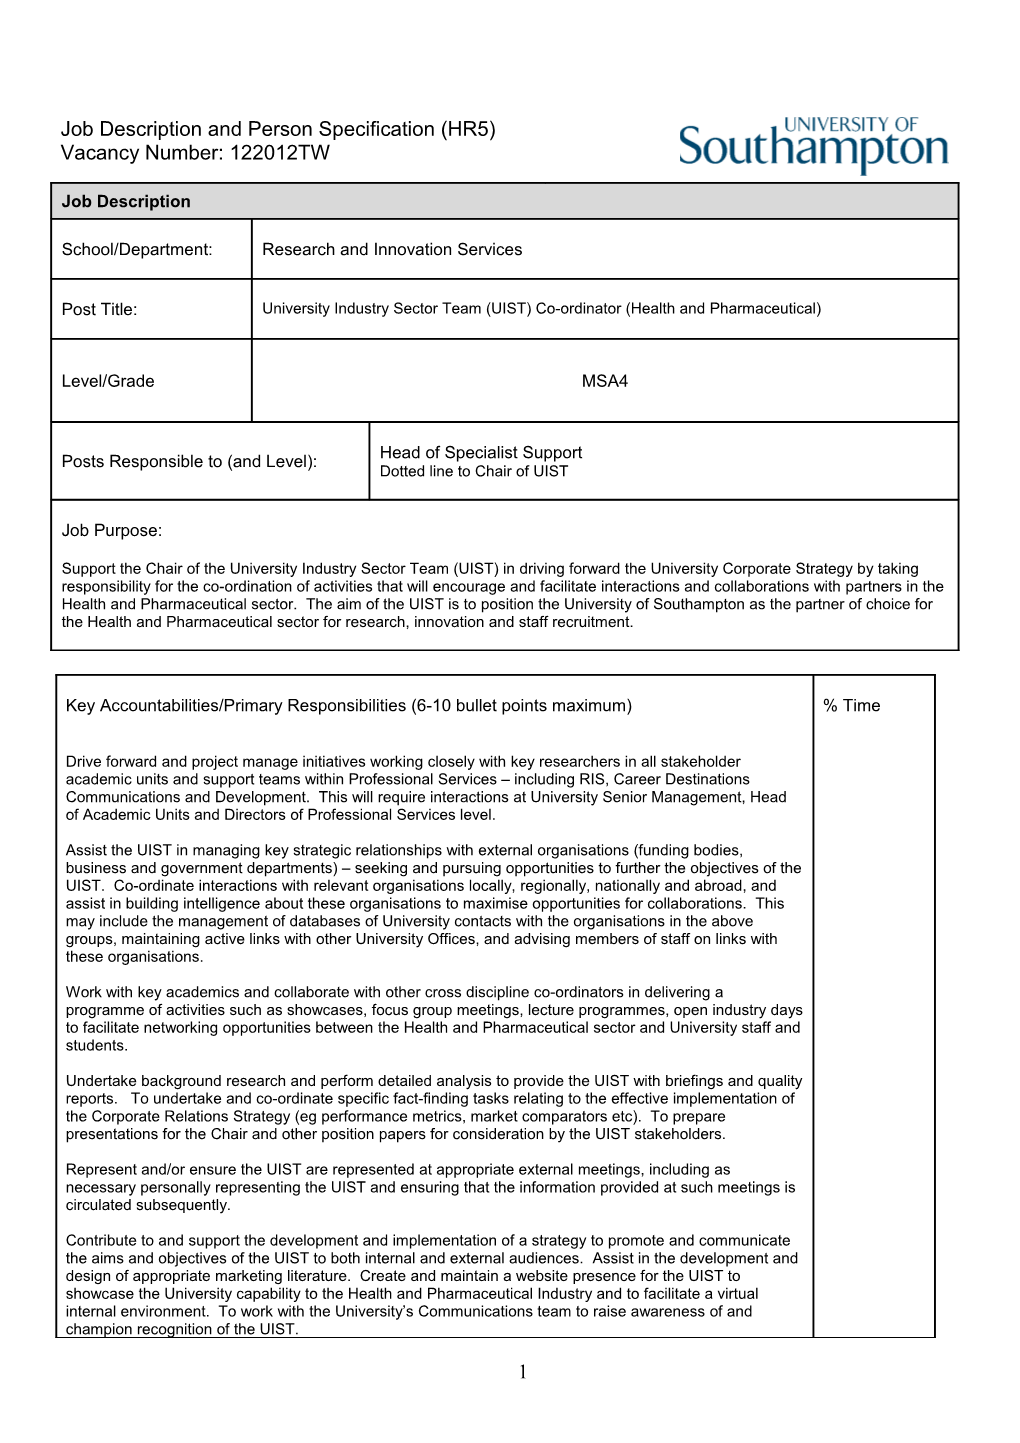 Job Description and Person Specification (HR5) s3